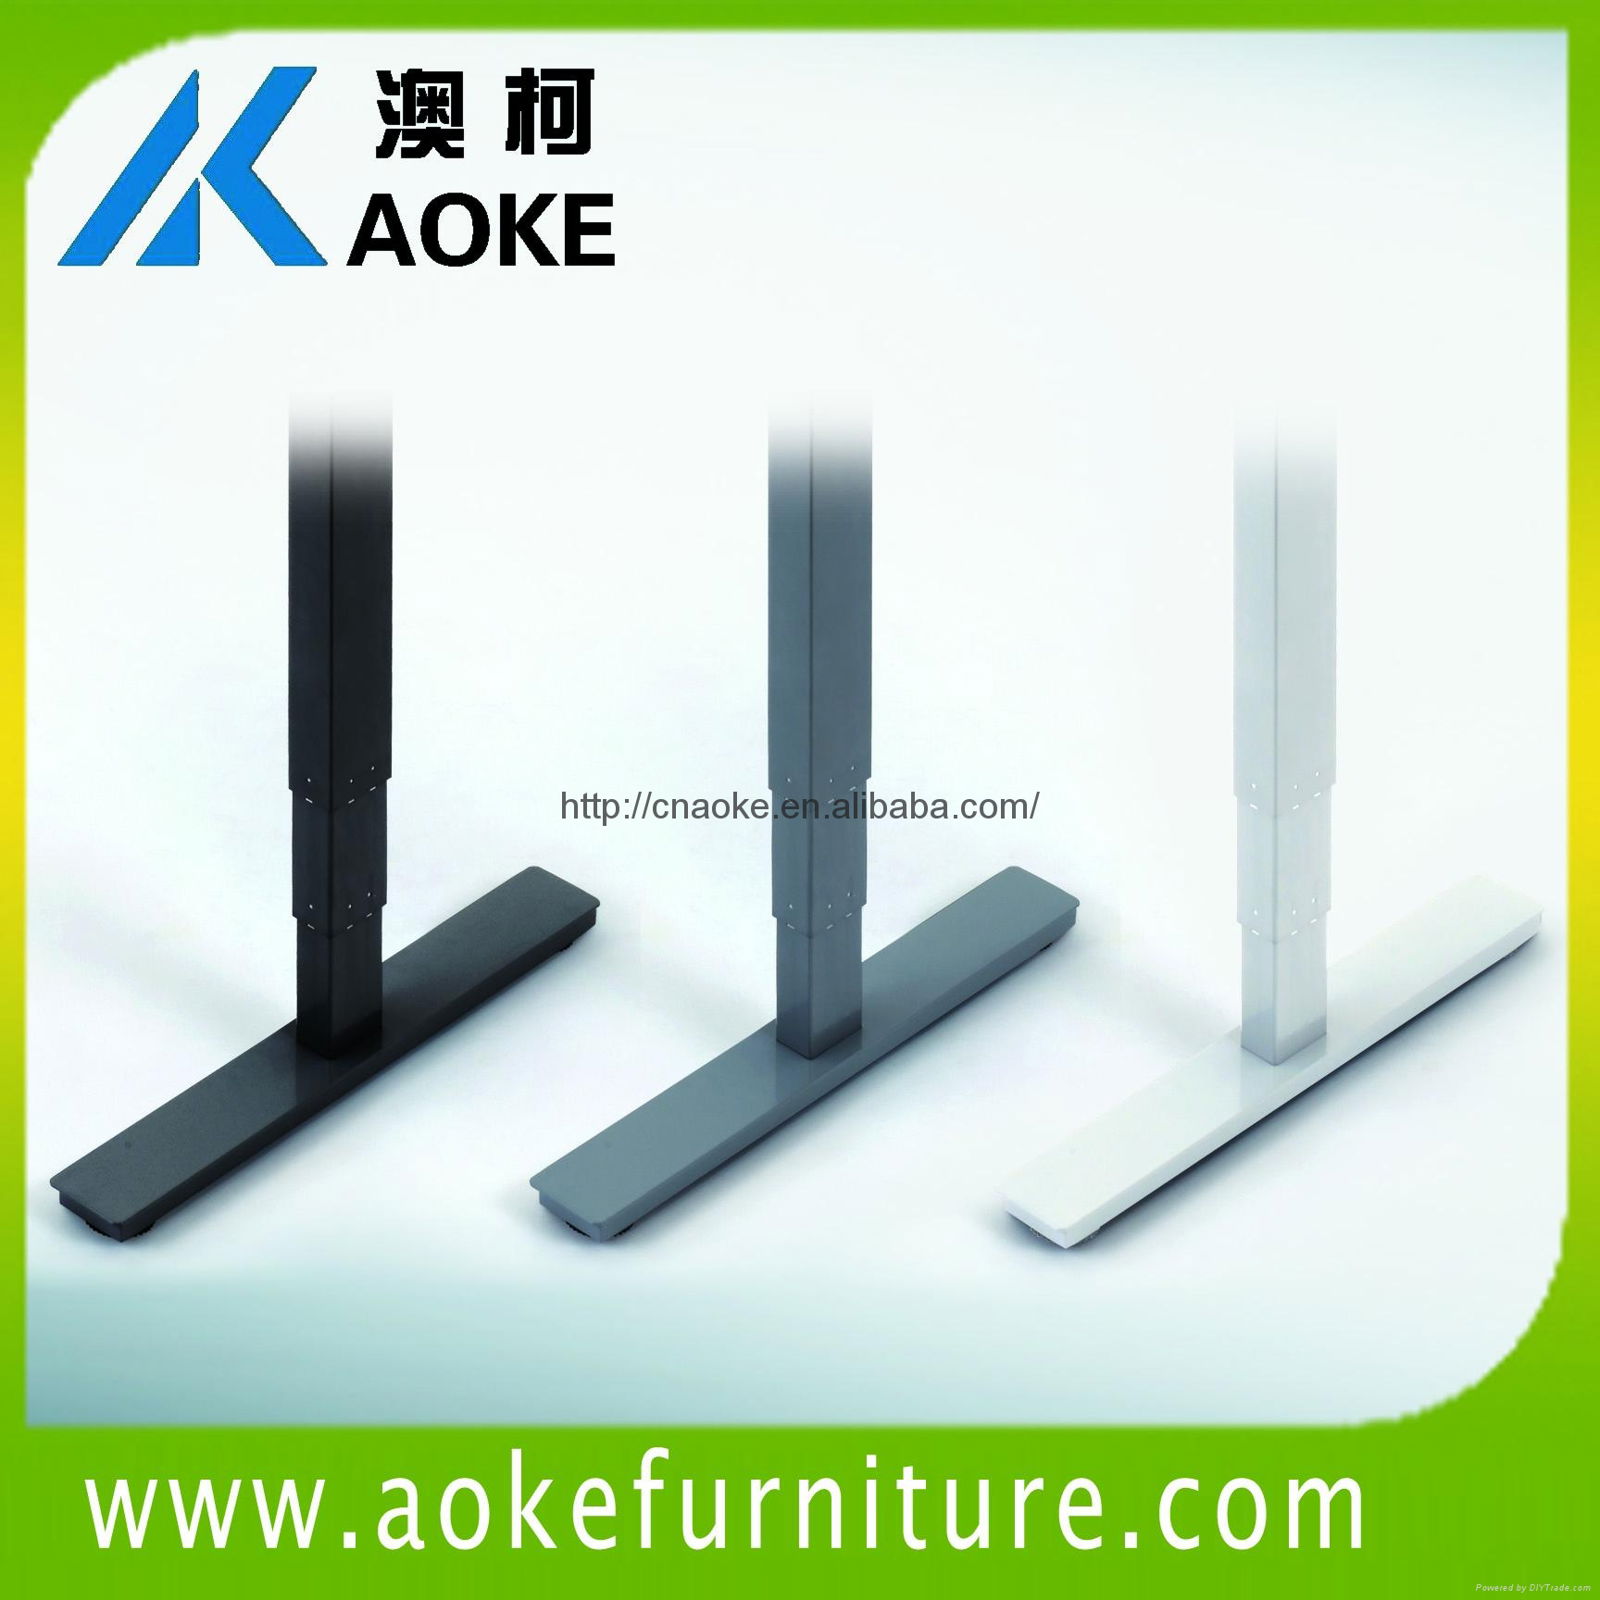 AOKE AK2RT-RS2 electric adjustable standing desk 4